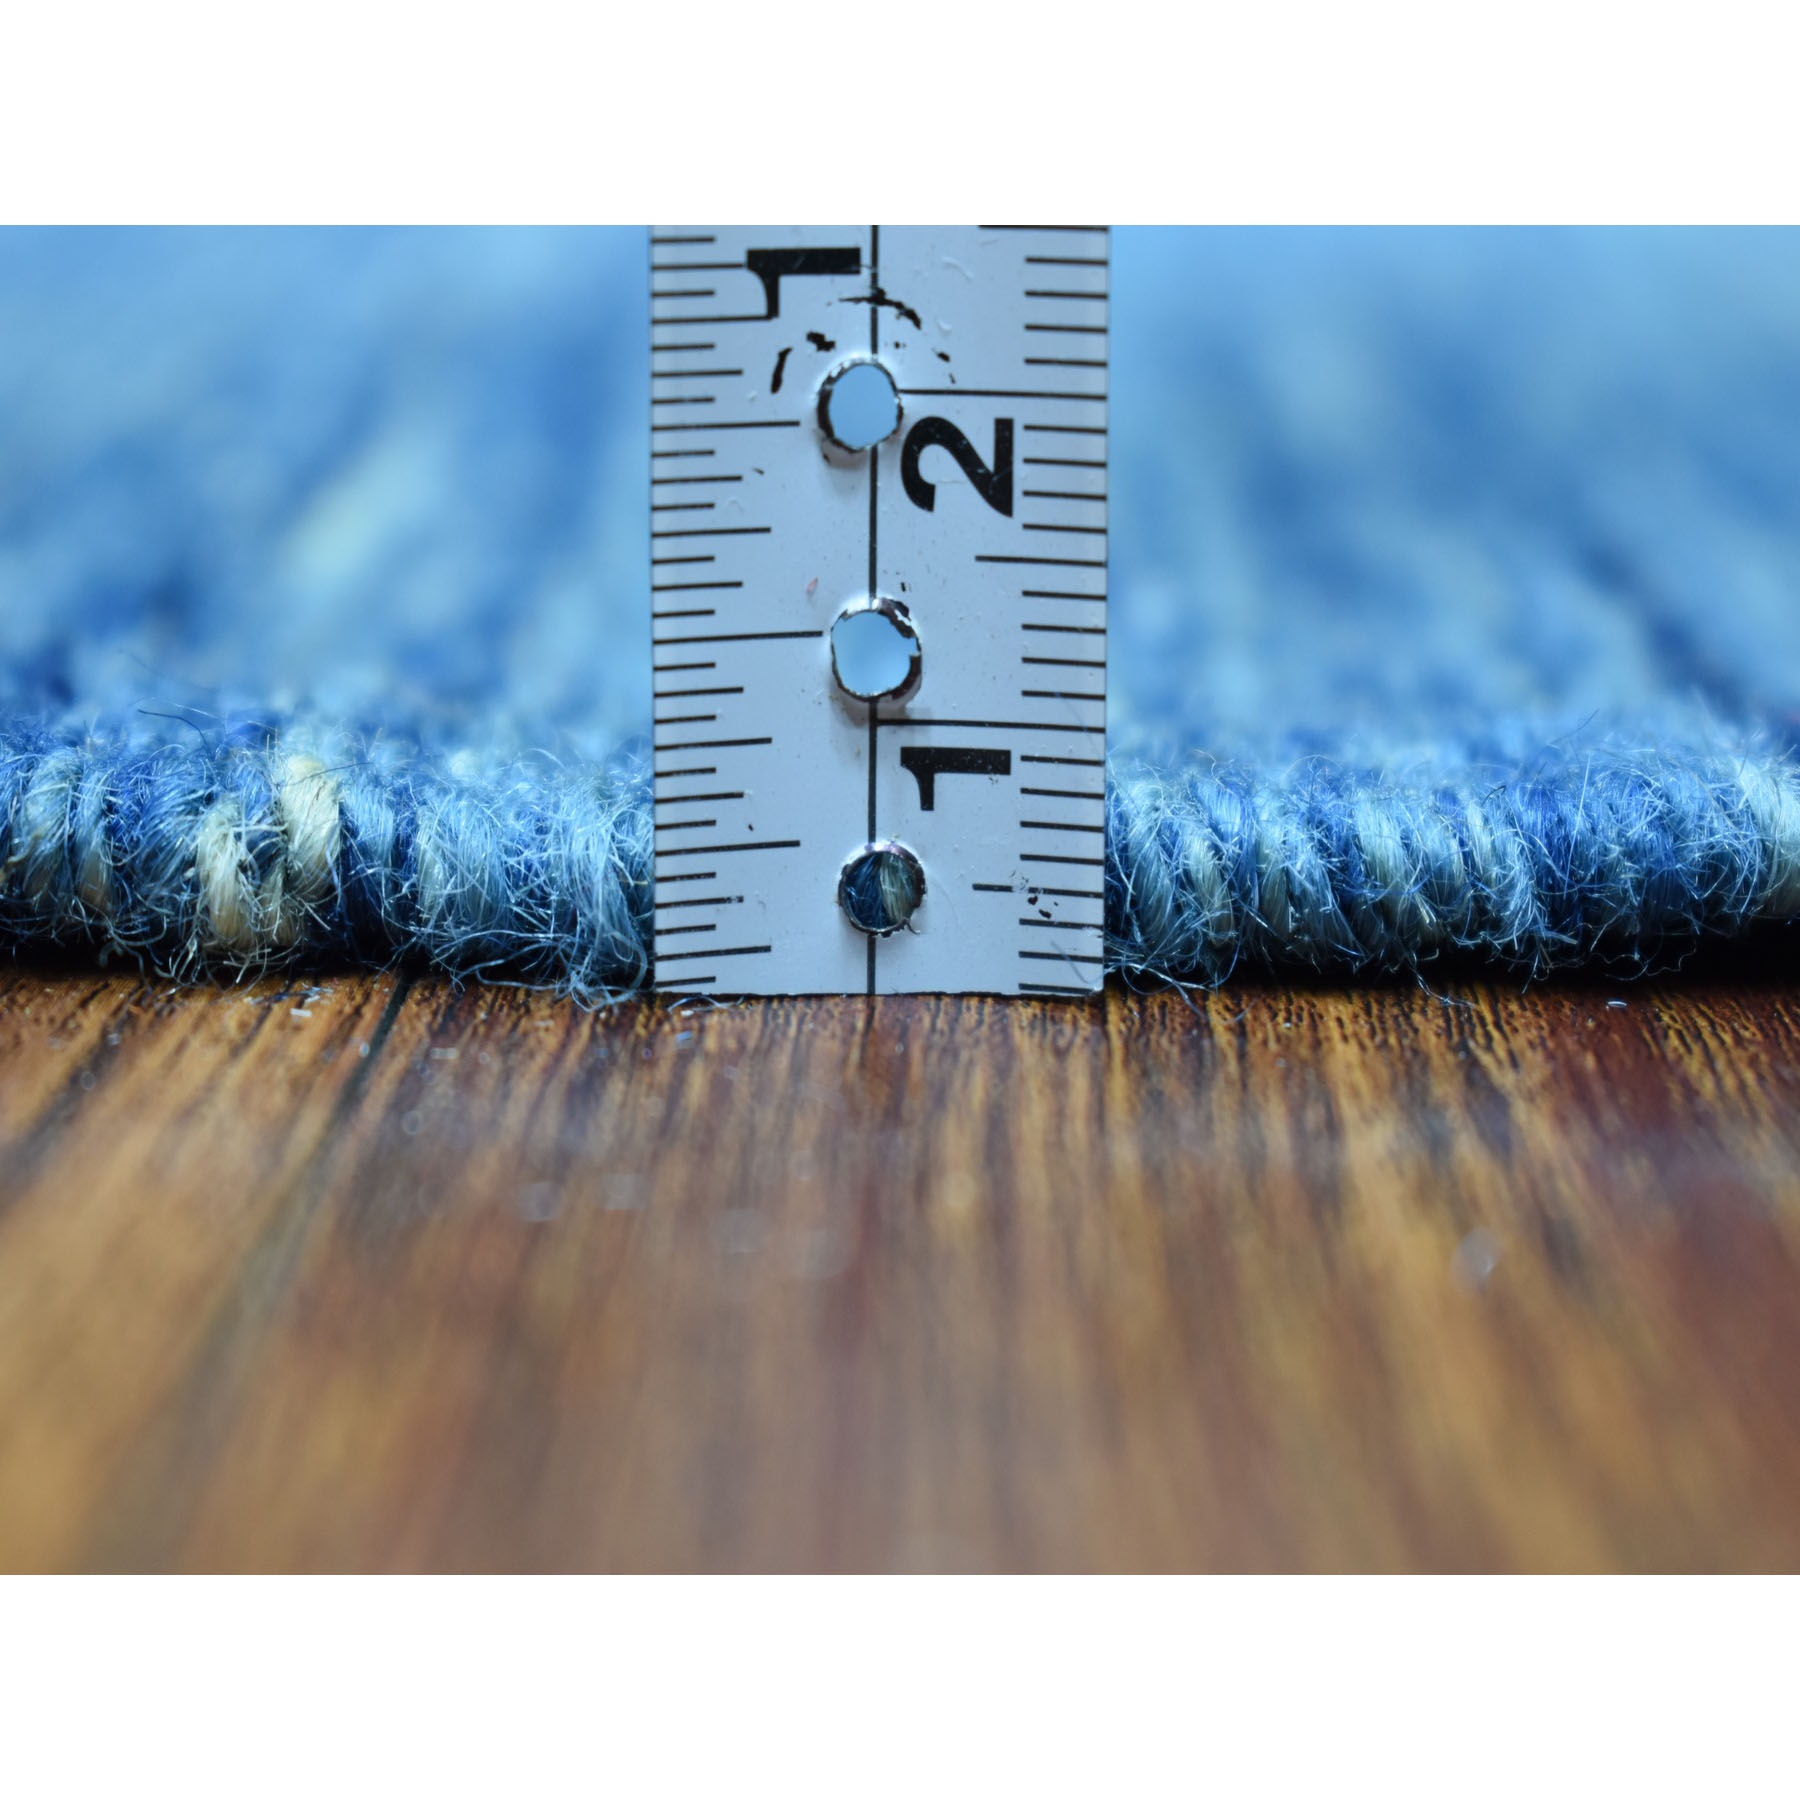 2-9 x9-8  Blue Shades Flat Weave Kilim Pure Wool Hand Woven Runner Oriental Rug 